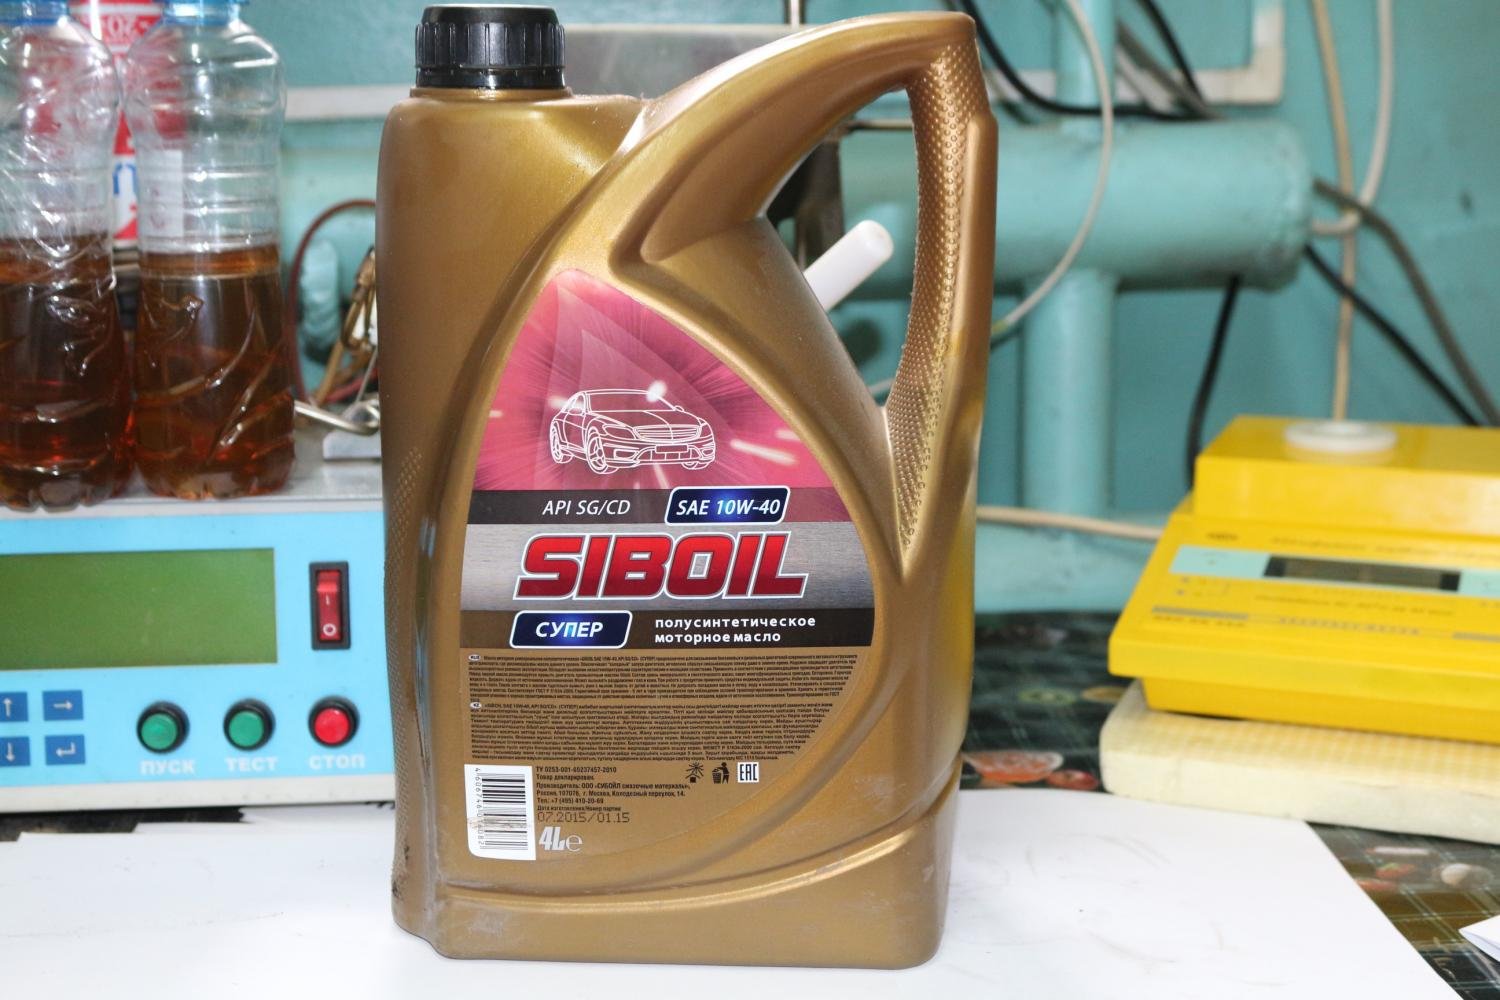 Полусинтетическое моторное масло 5w 40. Моторное масло Siboil супер SAE 10w 40. Масло моторное полусинтетическое Siboil супер 5w40 API SG/CD, 4л. Моторное масло Siboil 5w 40 полусинтетика. Siboil 5w40 платинум.